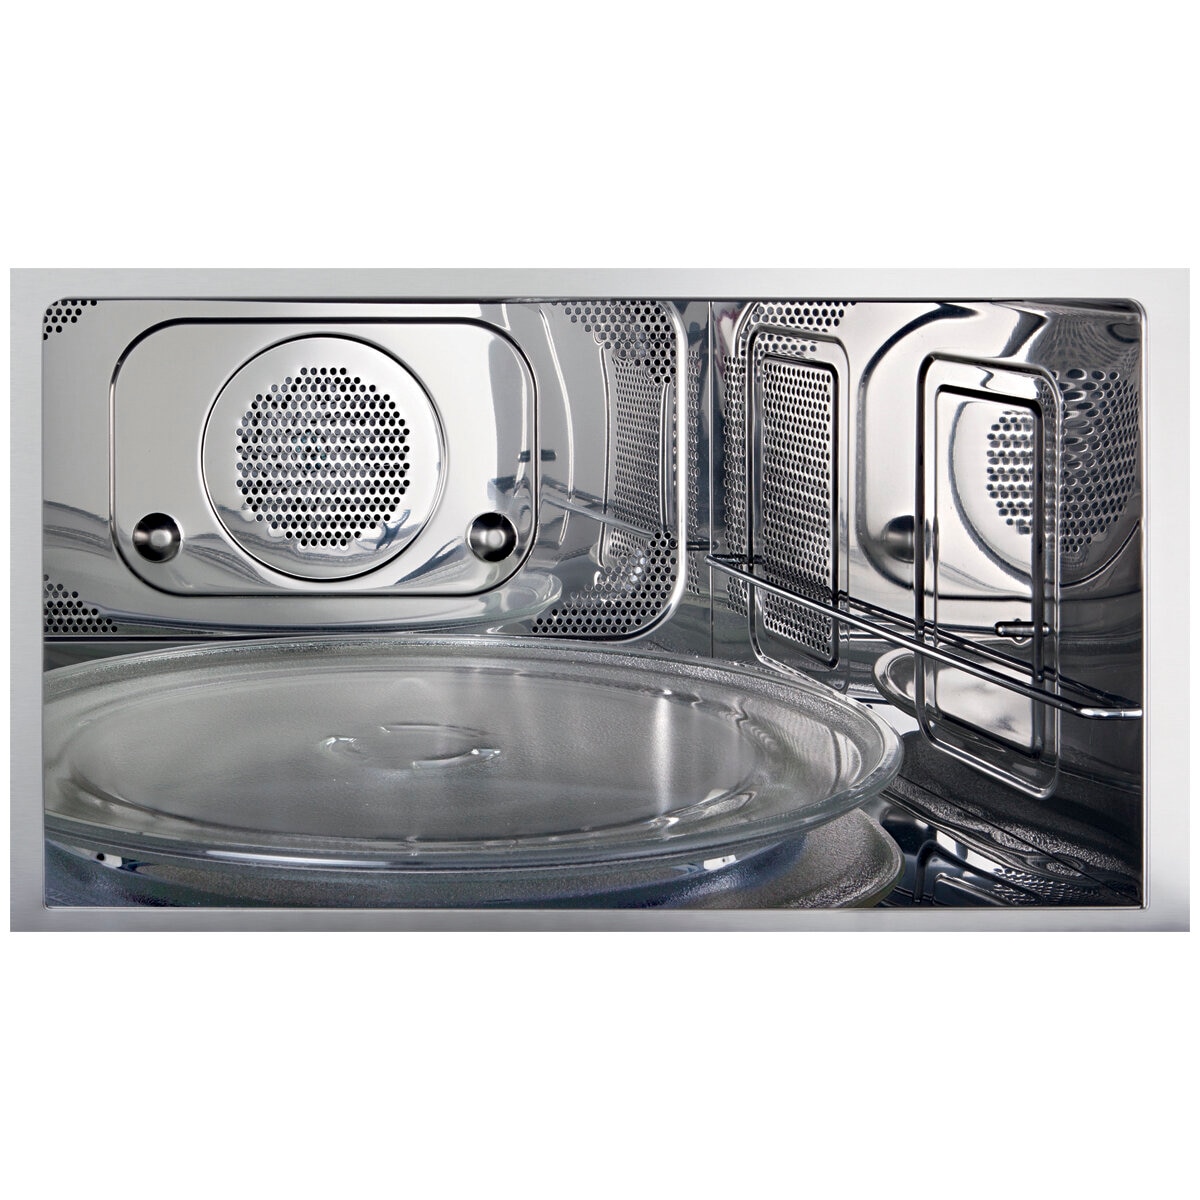 Whirlpool Crisp N Grill 31 Litre Microwave